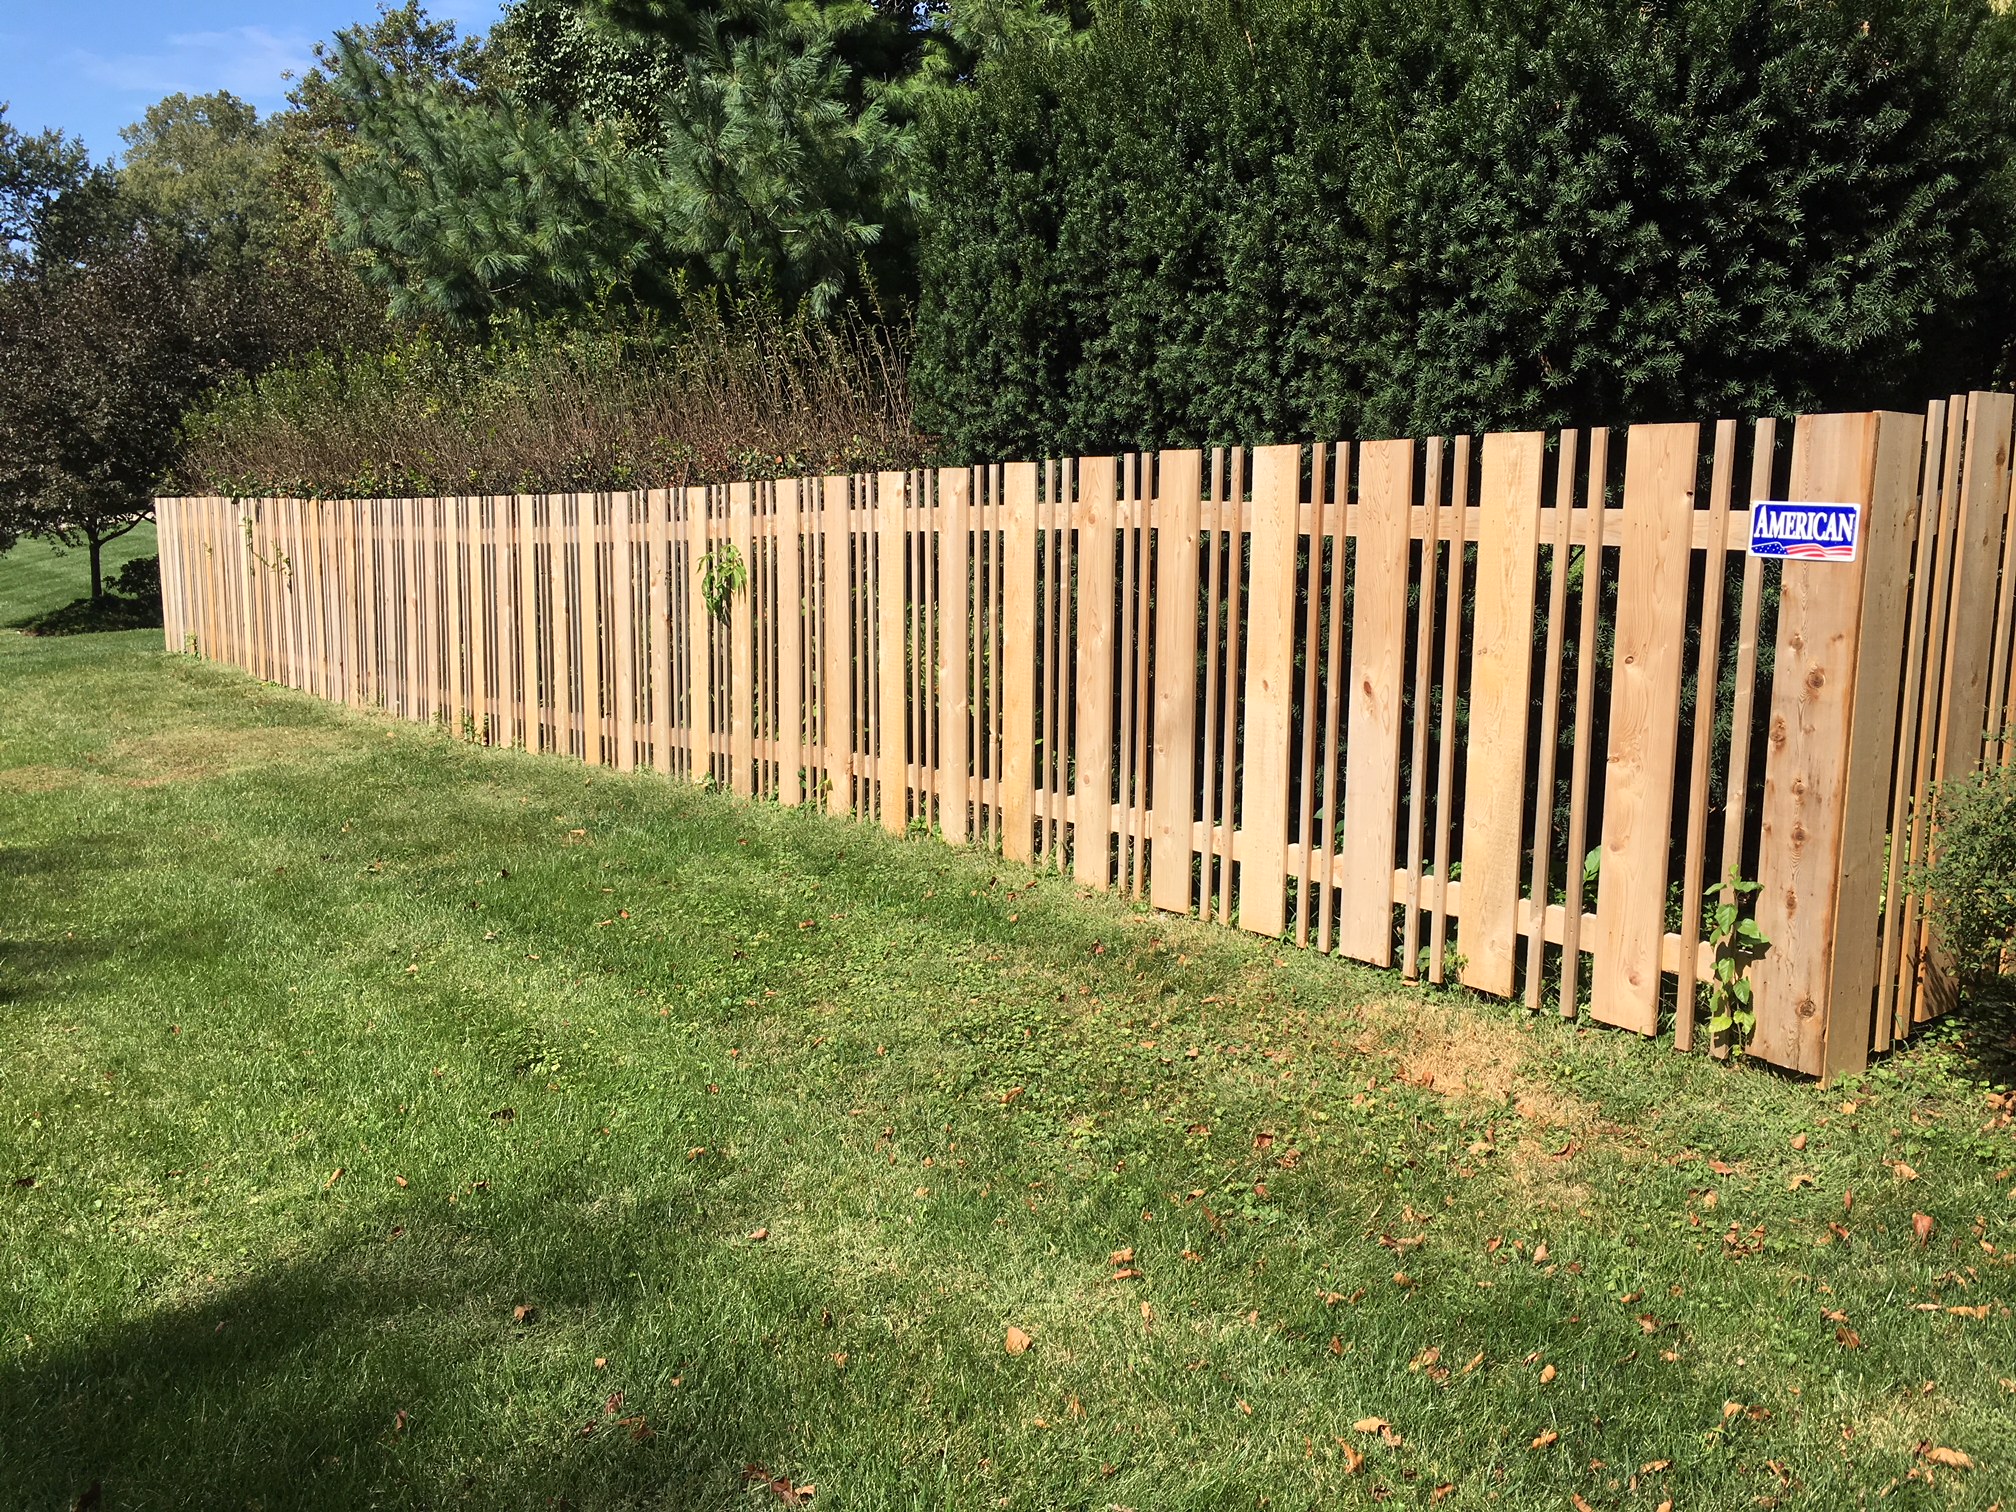 DIY Jobs Premade Fence Panels vs